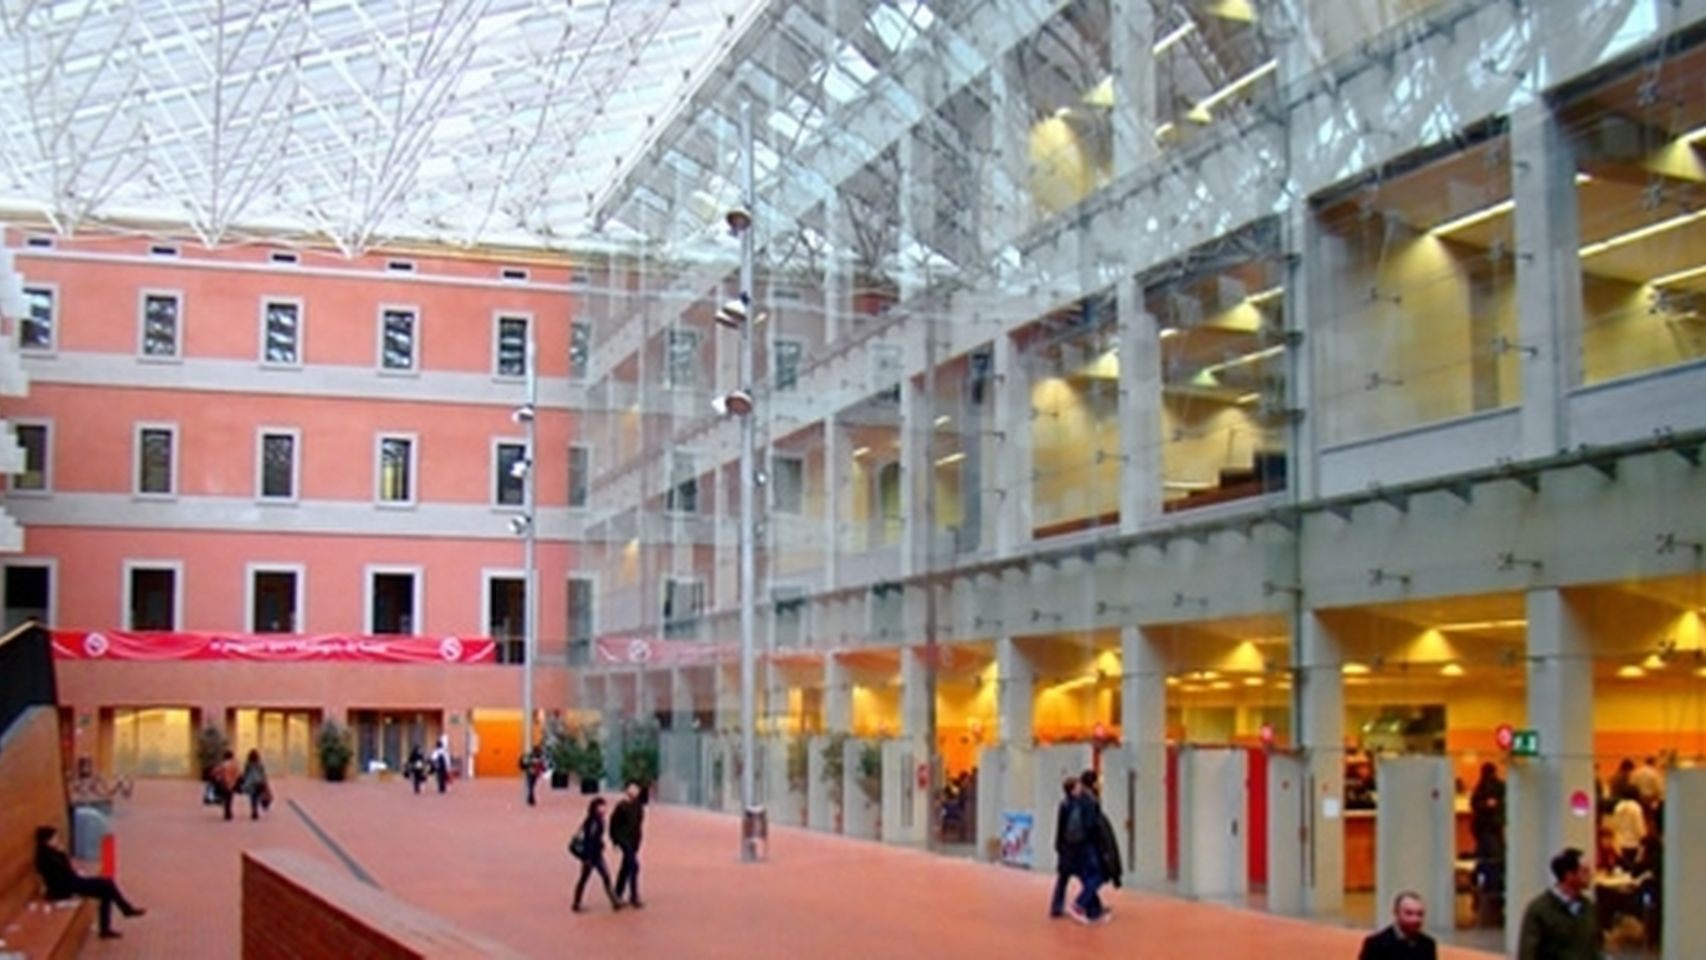 Plano general de la Universidad Pompeu Fabra de Barcelona